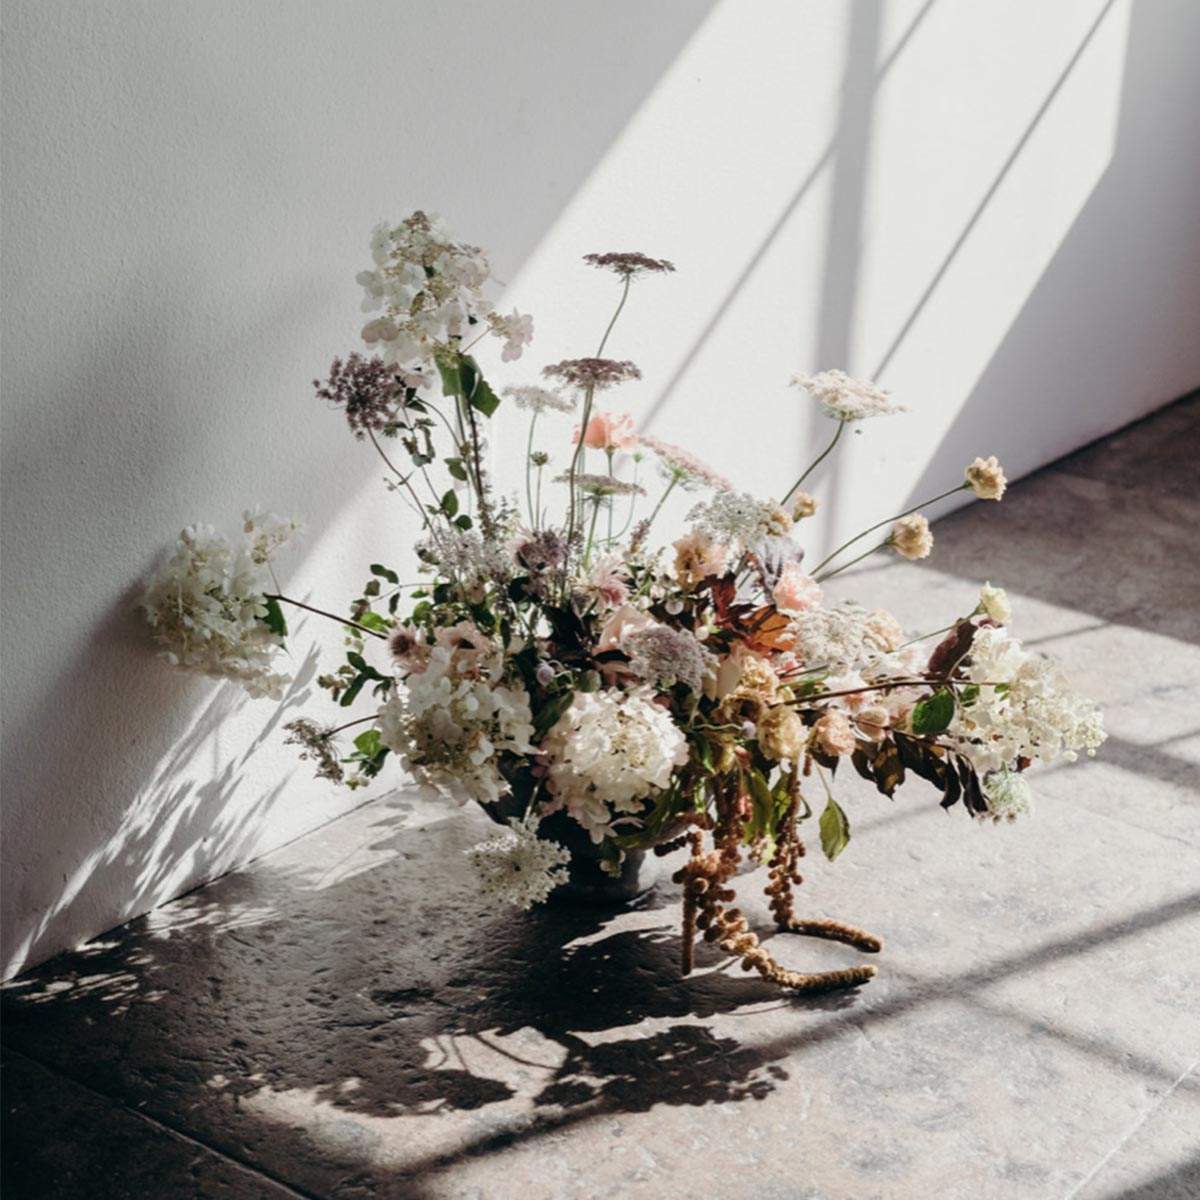 lambert_floral_studio_florists_on_thursd_featured